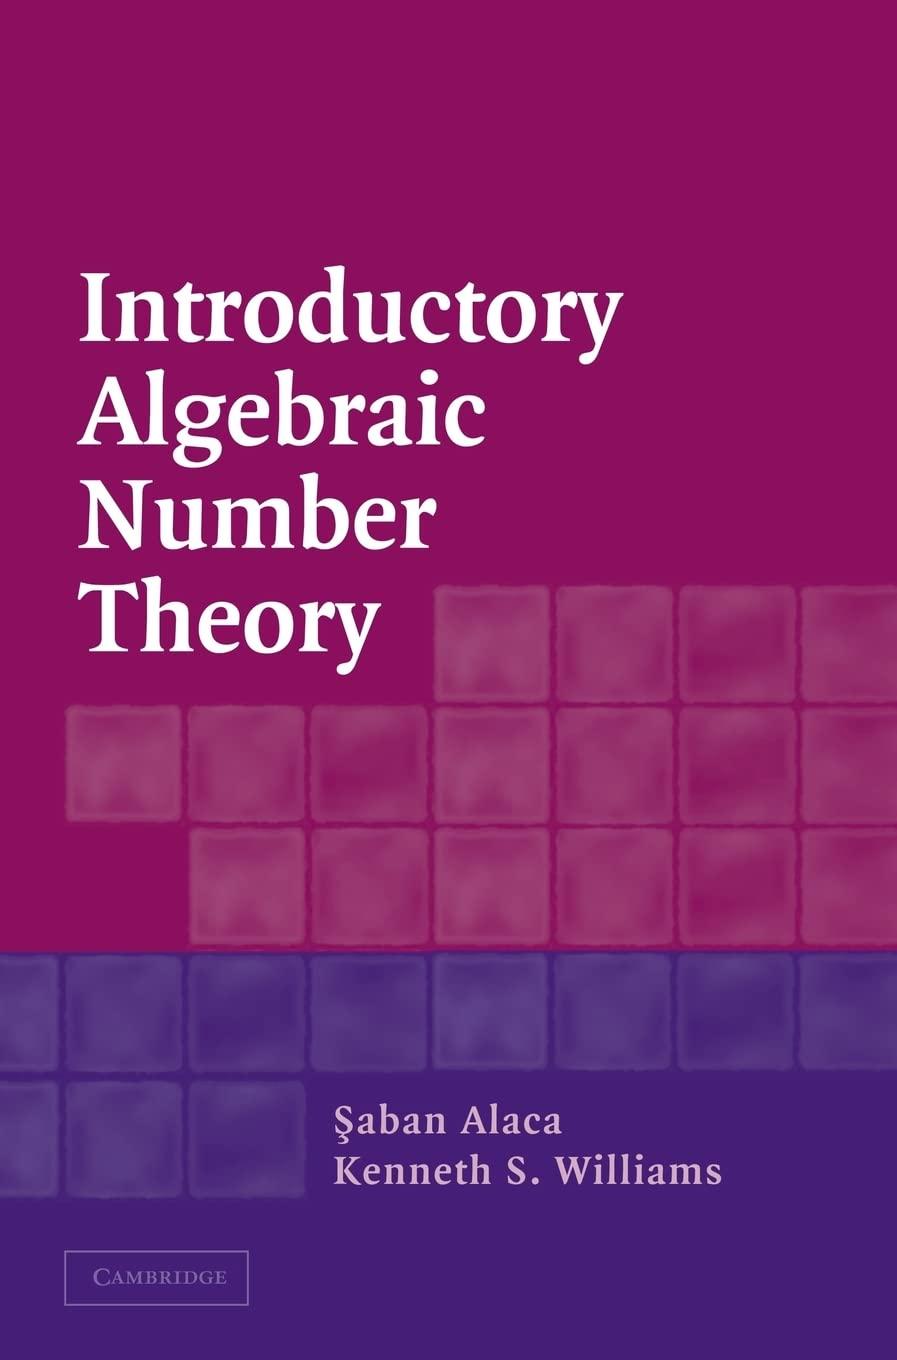 introductory algebraic number theory 1st edition saban alaca, kenneth s. williams 0521832500, 9780521832502